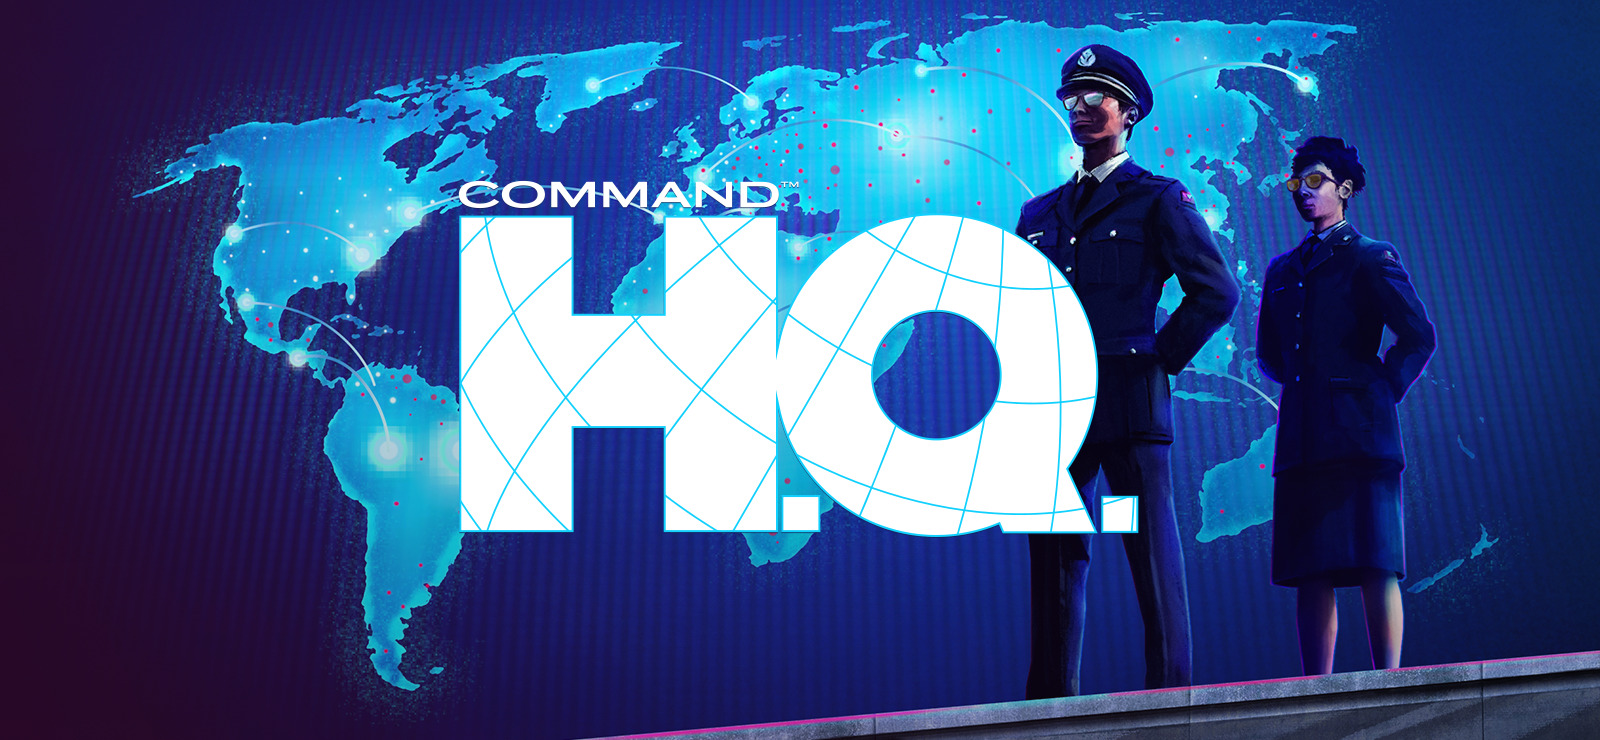 Command h